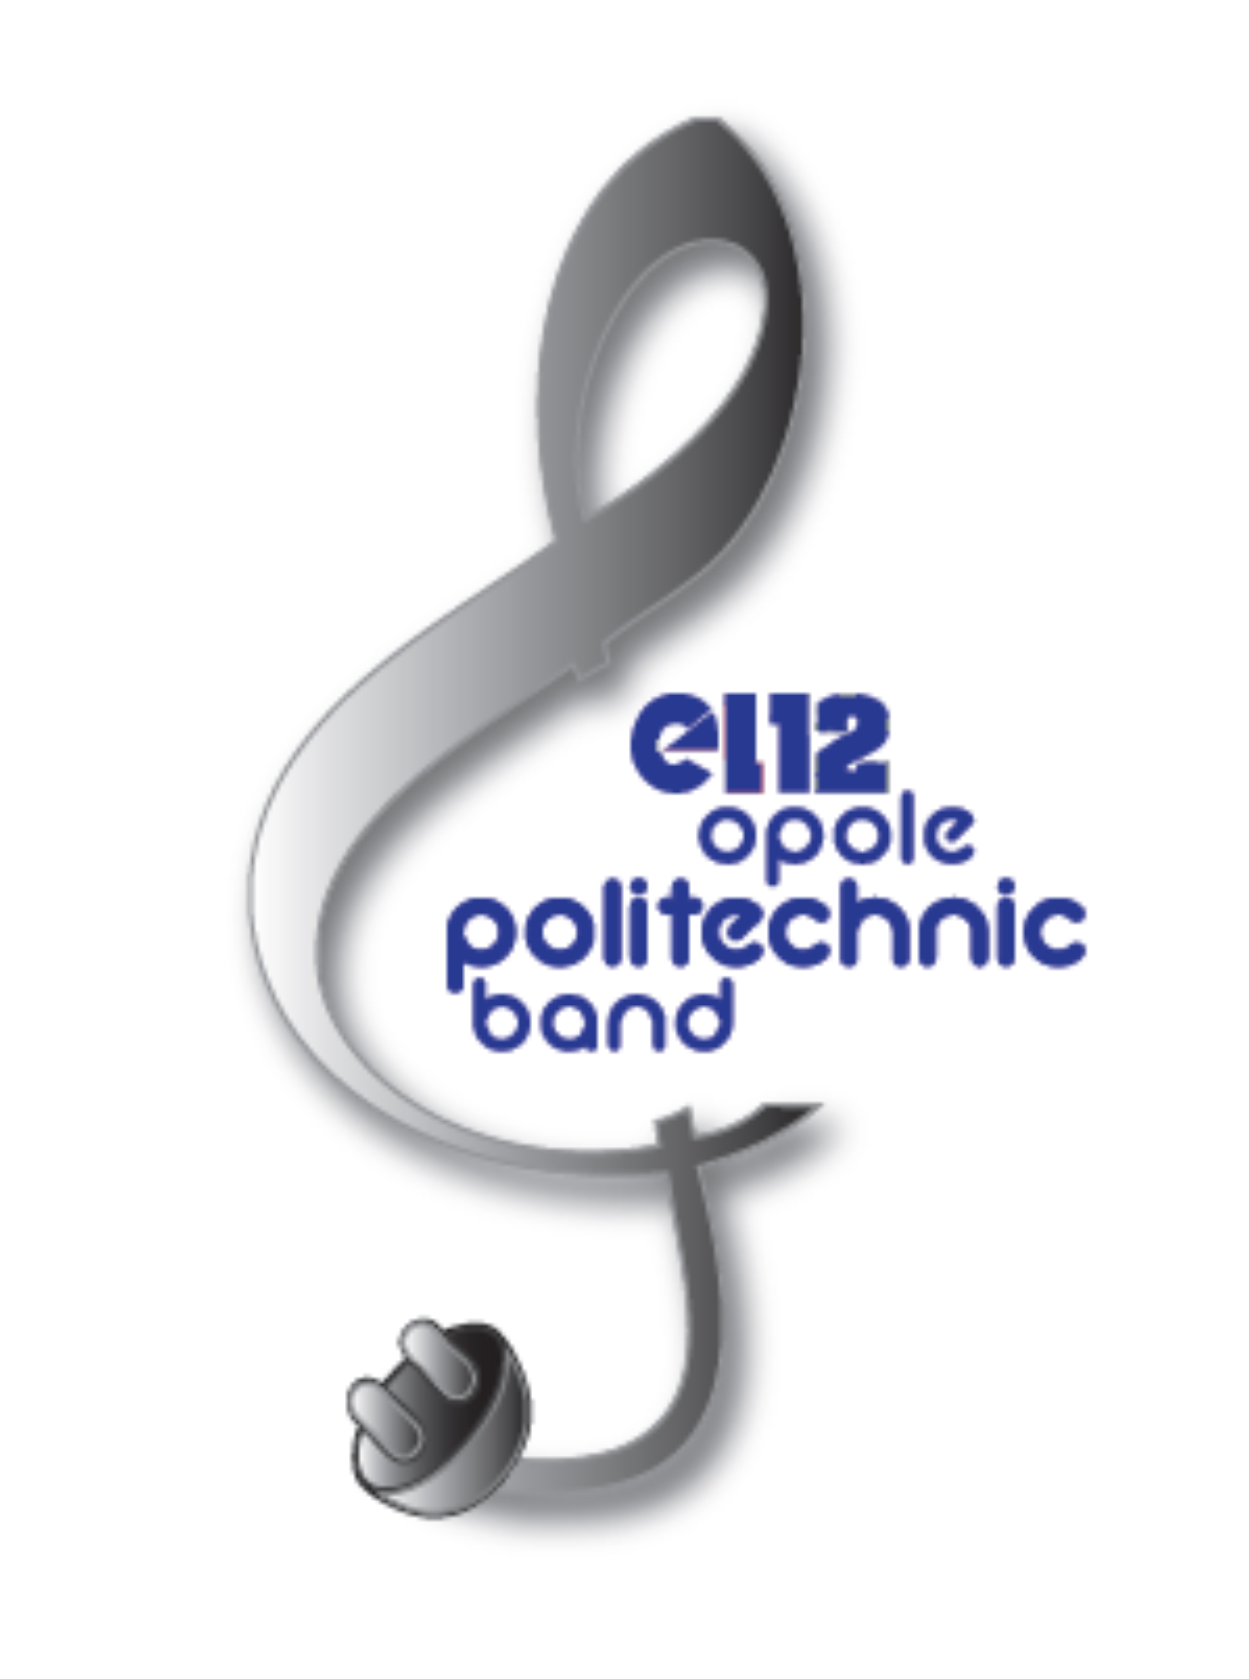 el12 Opole Politechnic Band logo